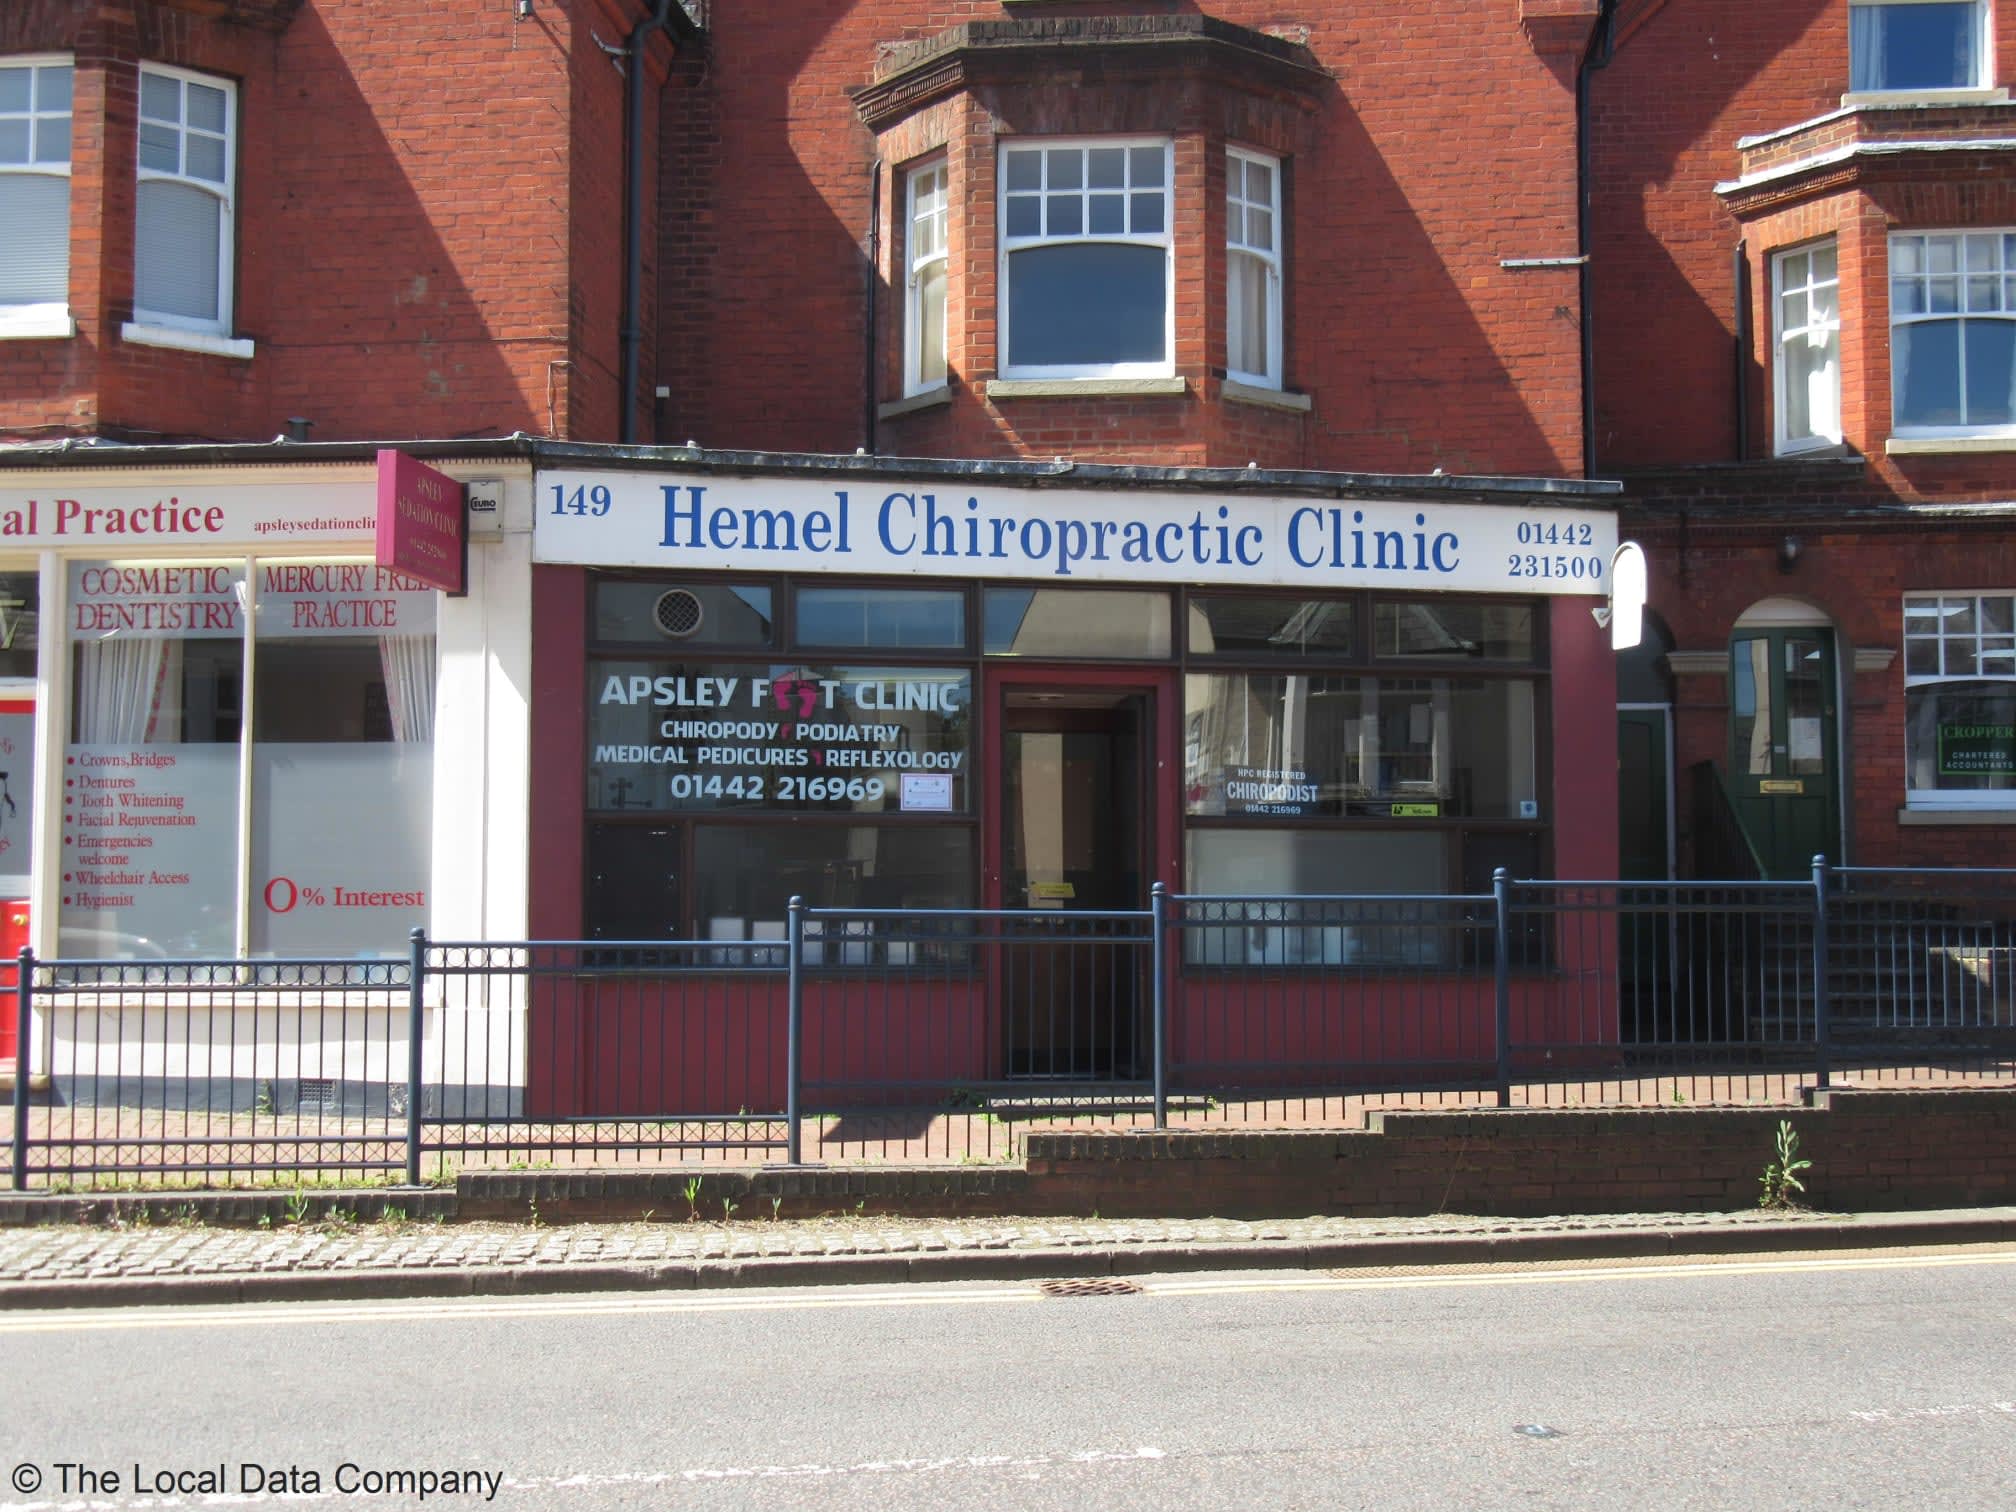 Hemel Chiropractic Clinic Hemel Hempstead 01442 231500